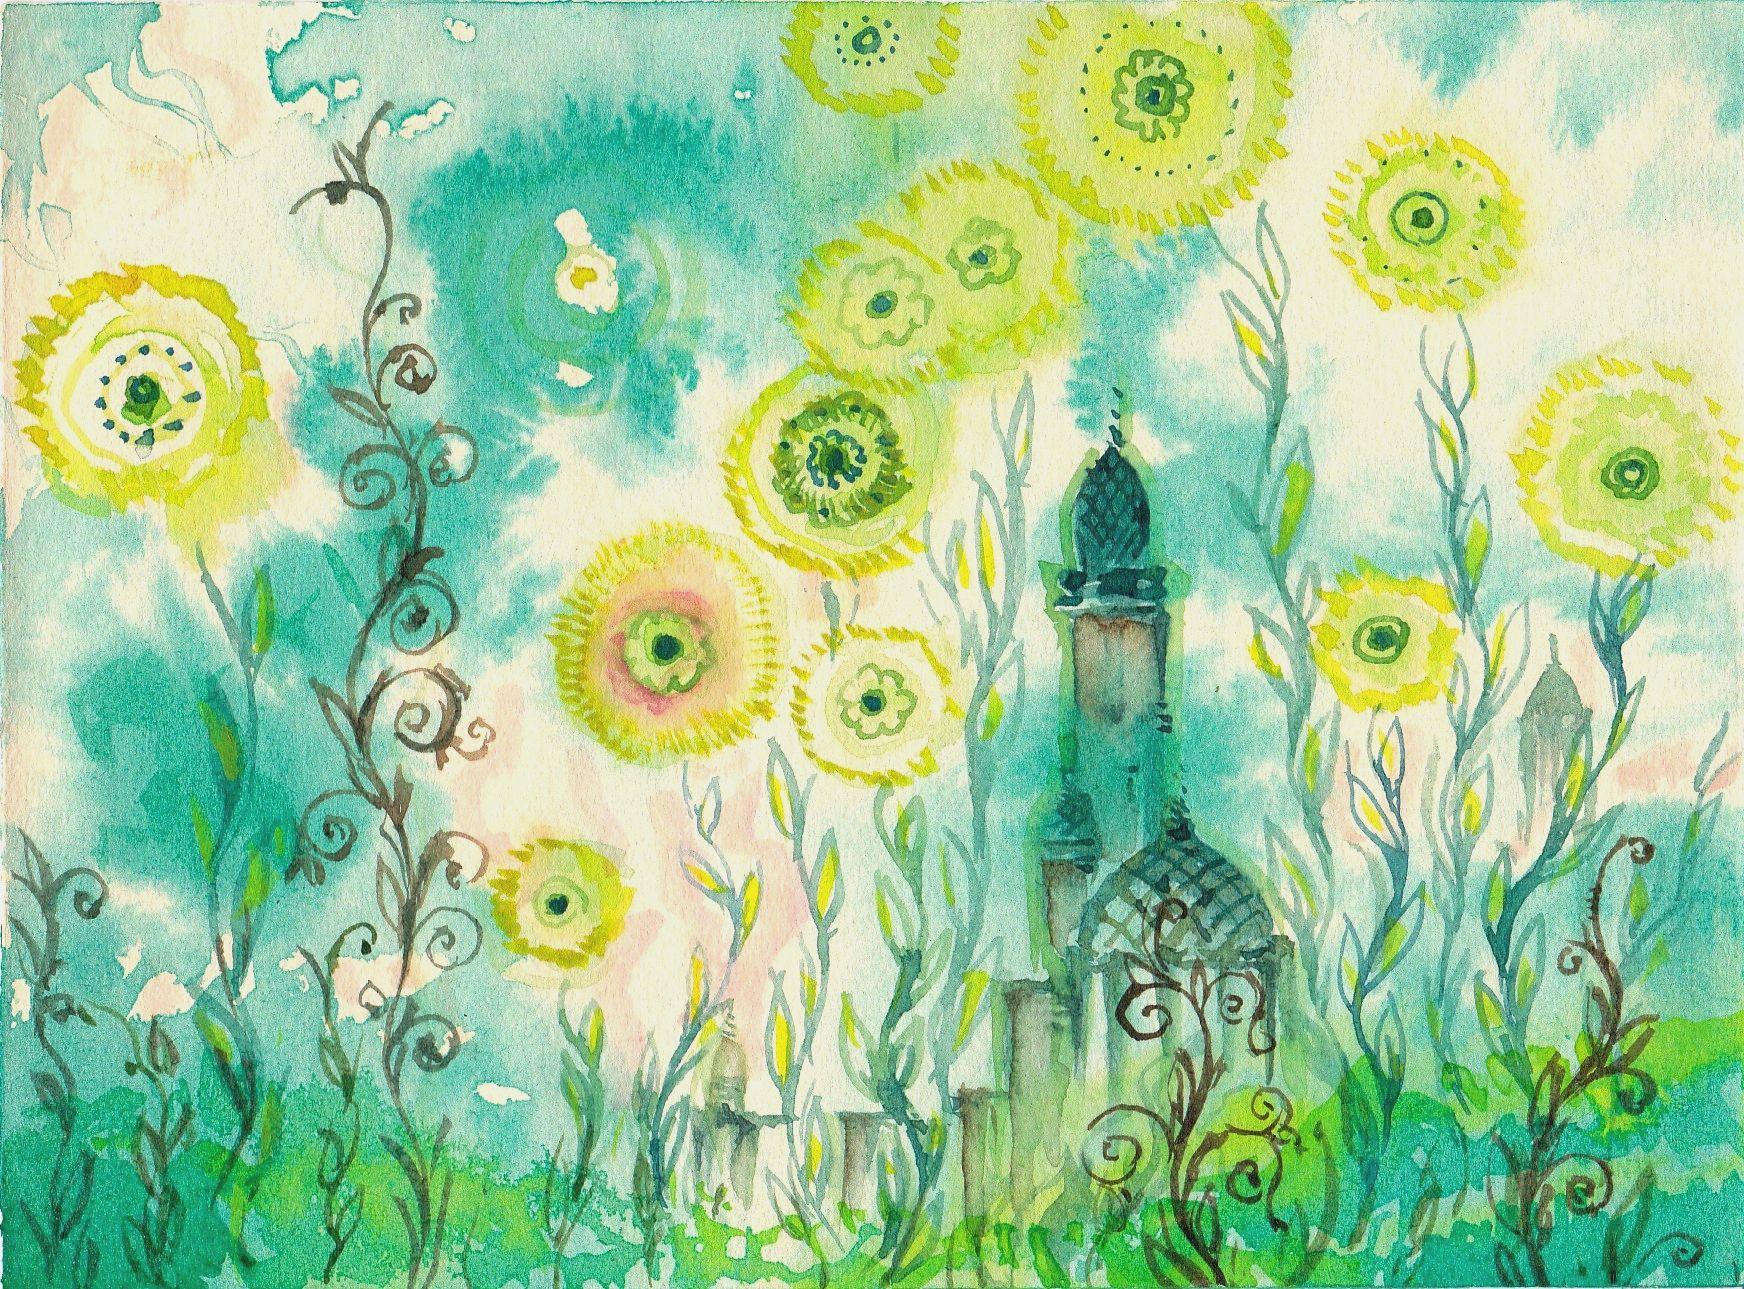 Herberts Mangolds Landscape Art - Flowers over the City. 1975. Watercolor on paper, 11x14, 8 cm